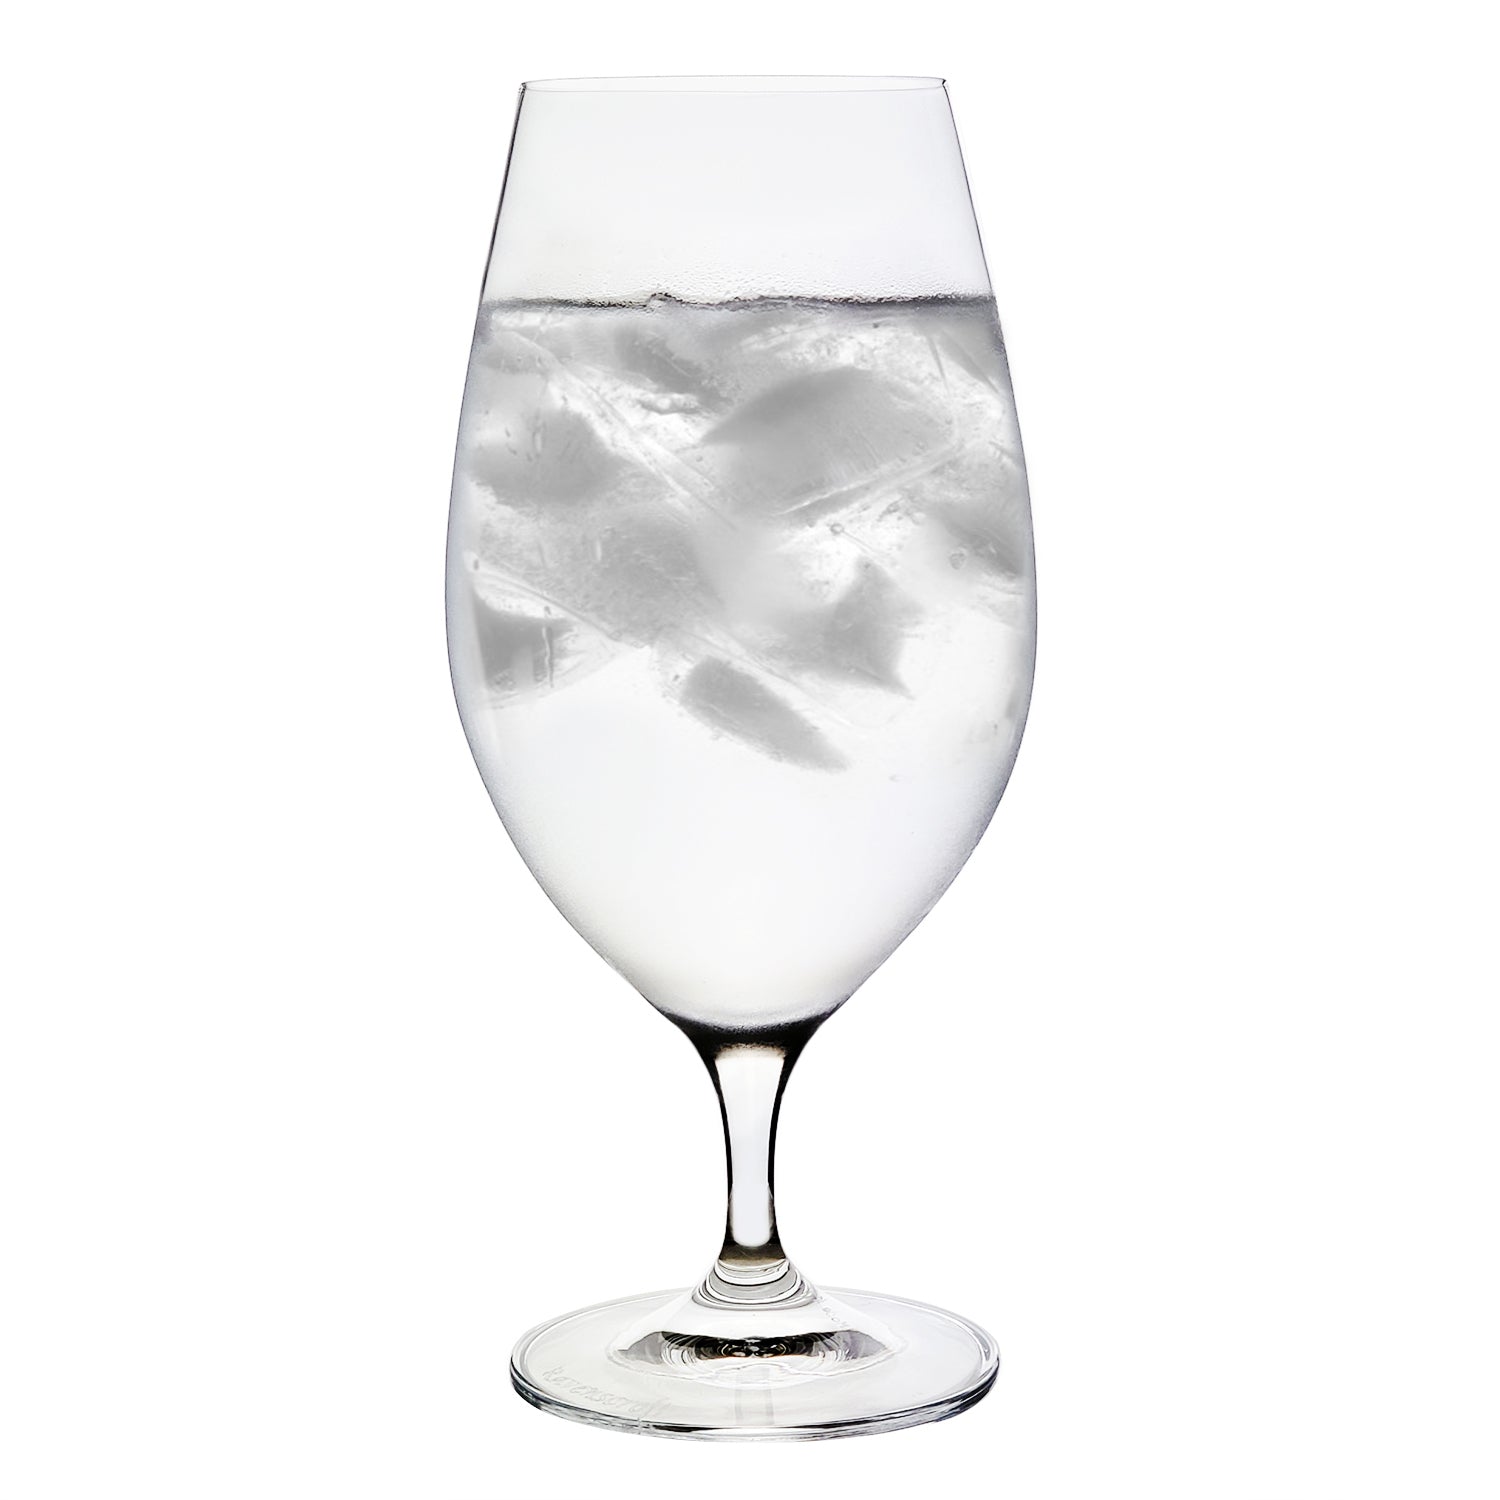 Titanium Pro Water/Beer Glass (Master Carton of 24)